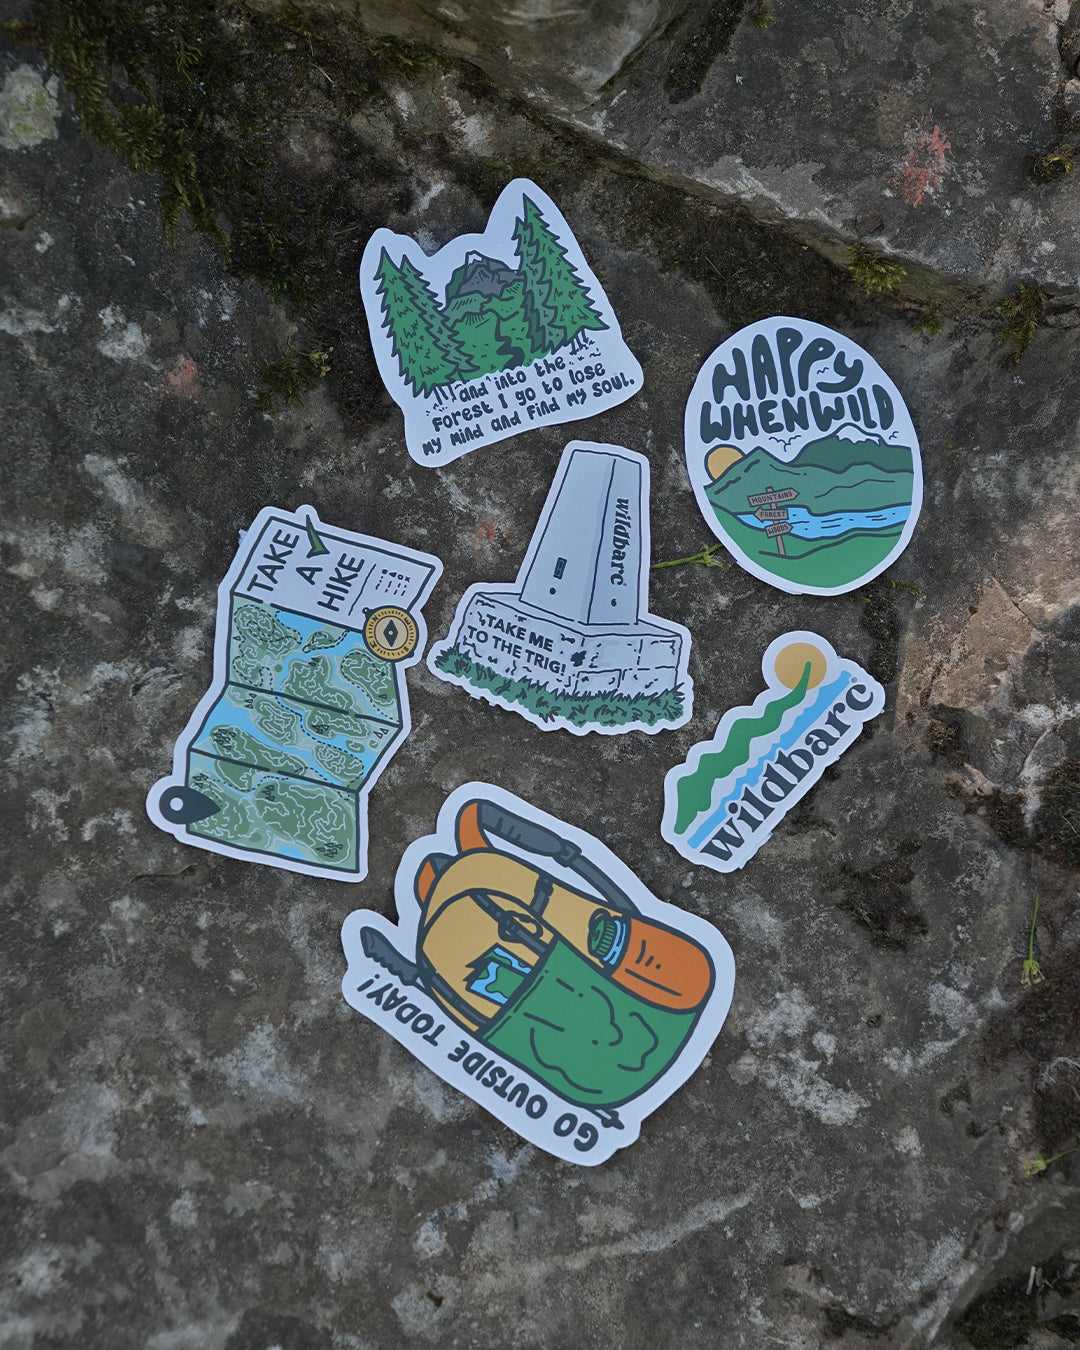 Wildbarc Hike More Sticker Pack